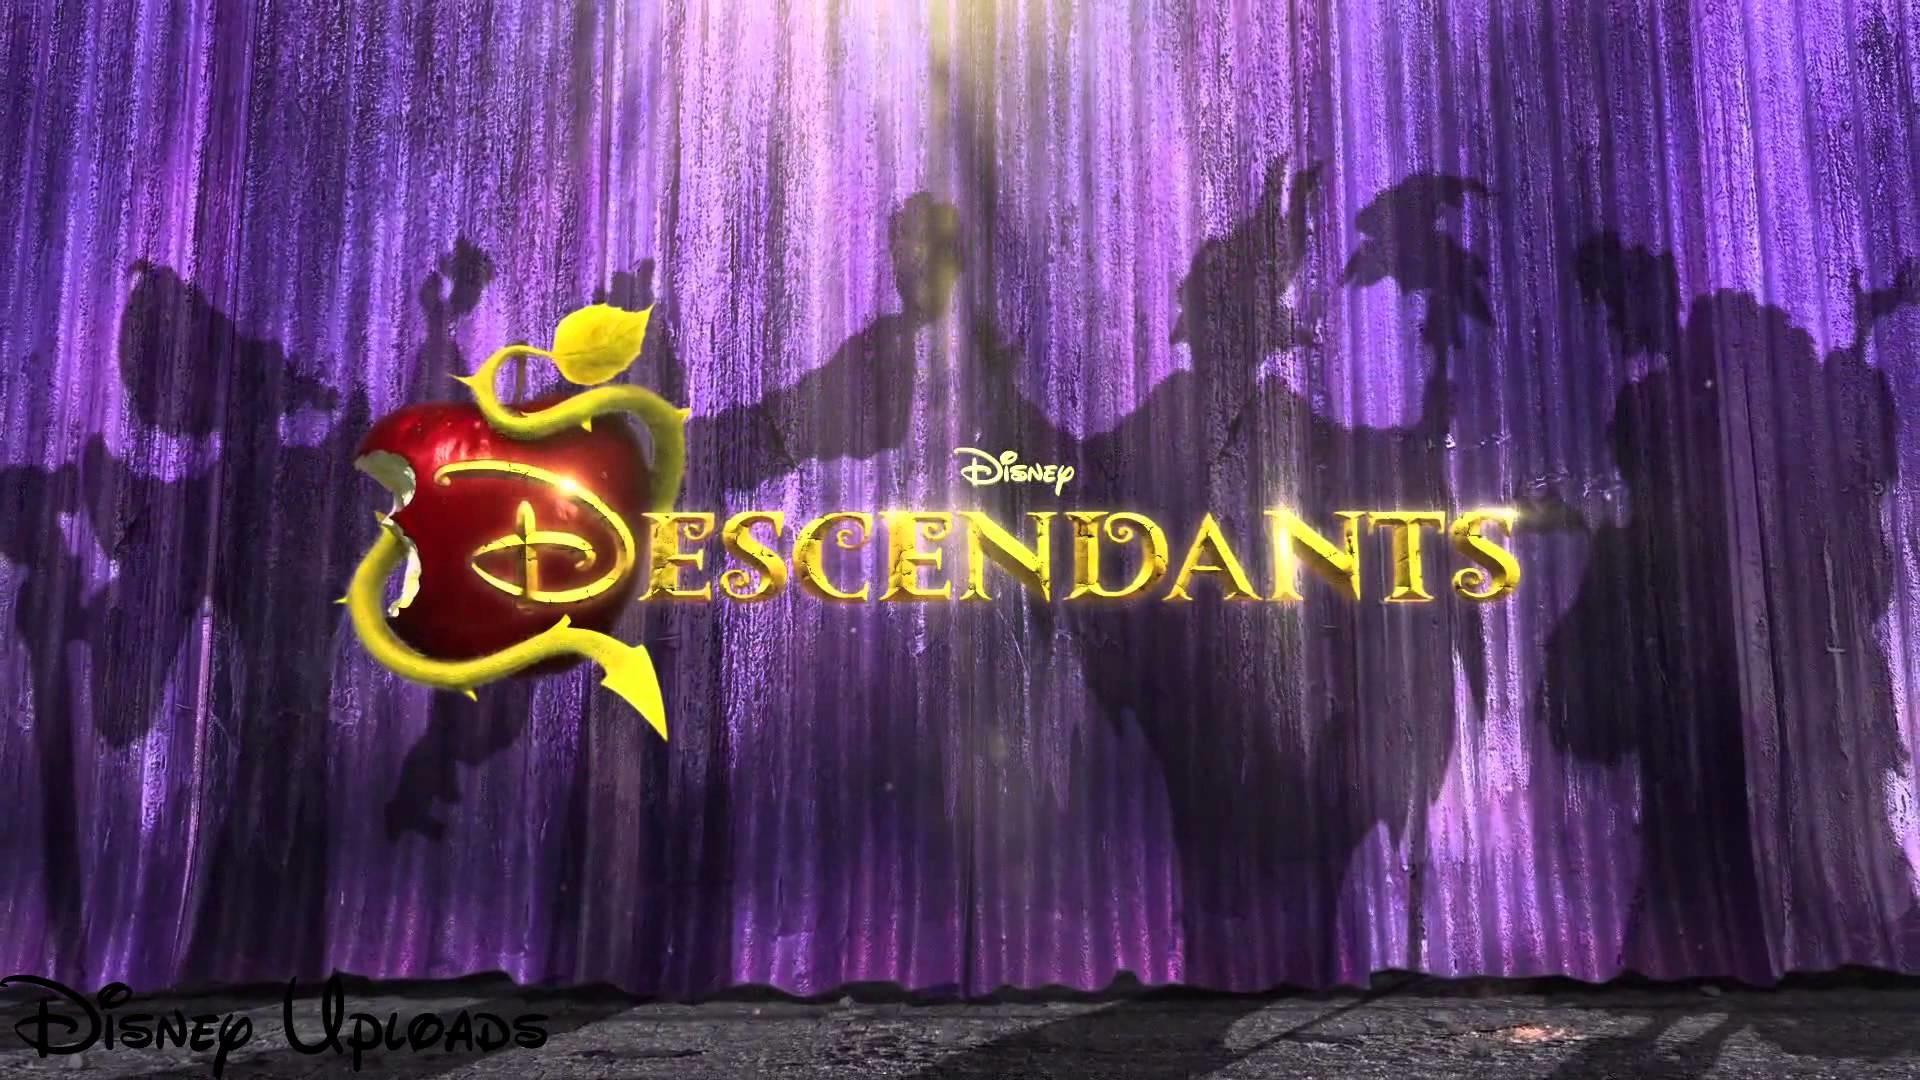 Descendants Disney Movie Wallpaper